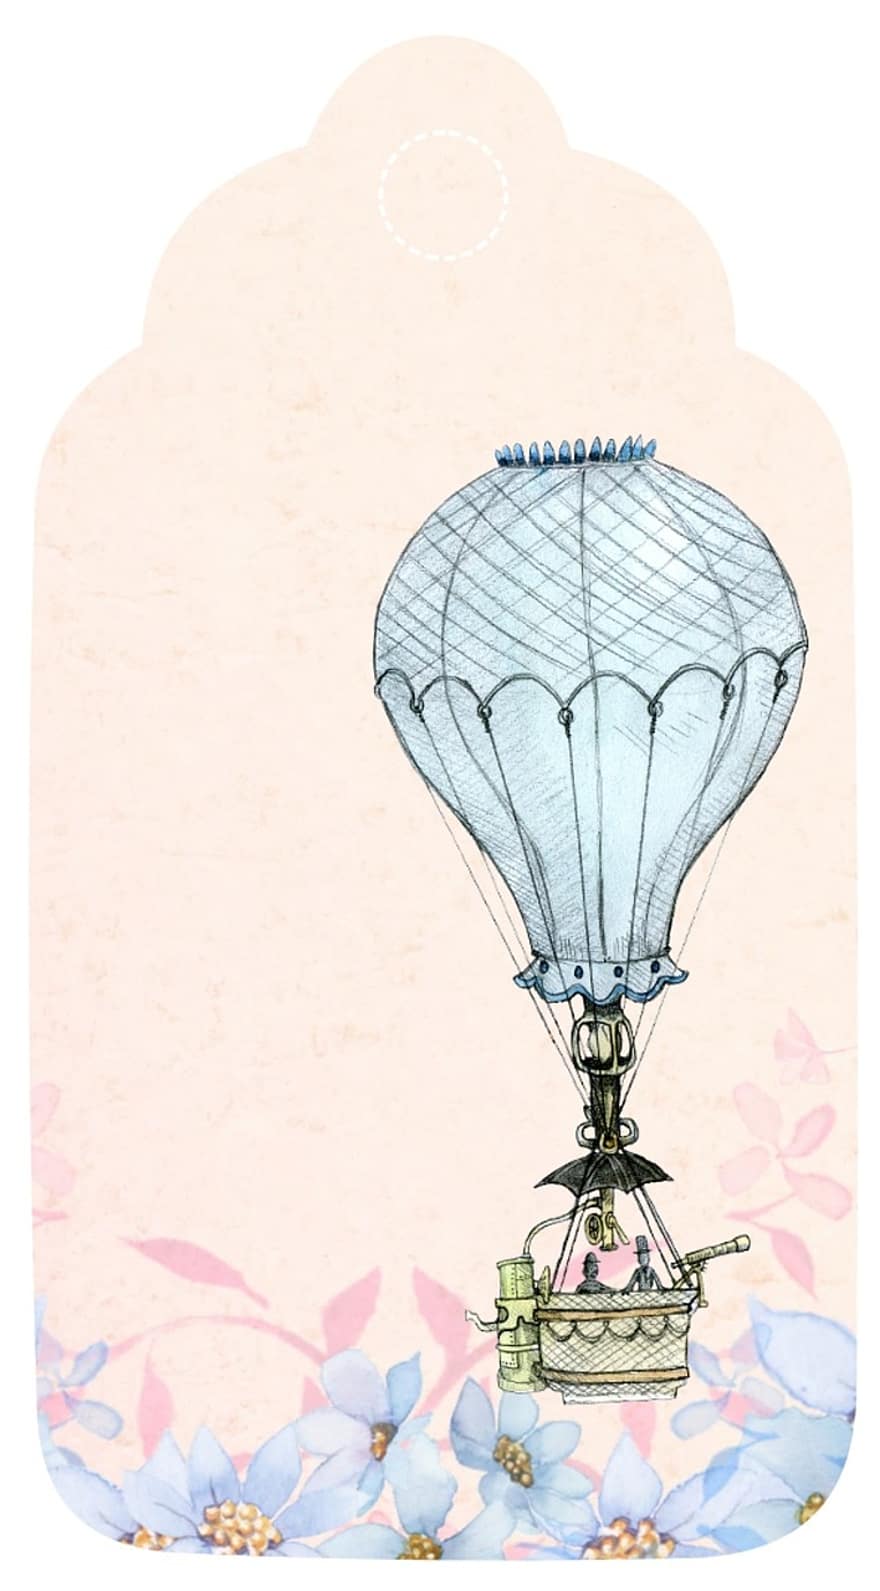 Hot Air Balloon, Tag, Romantic, Scrapbook, Pink, Blue, Bird, Vintage, Greeting, Decoration, Card